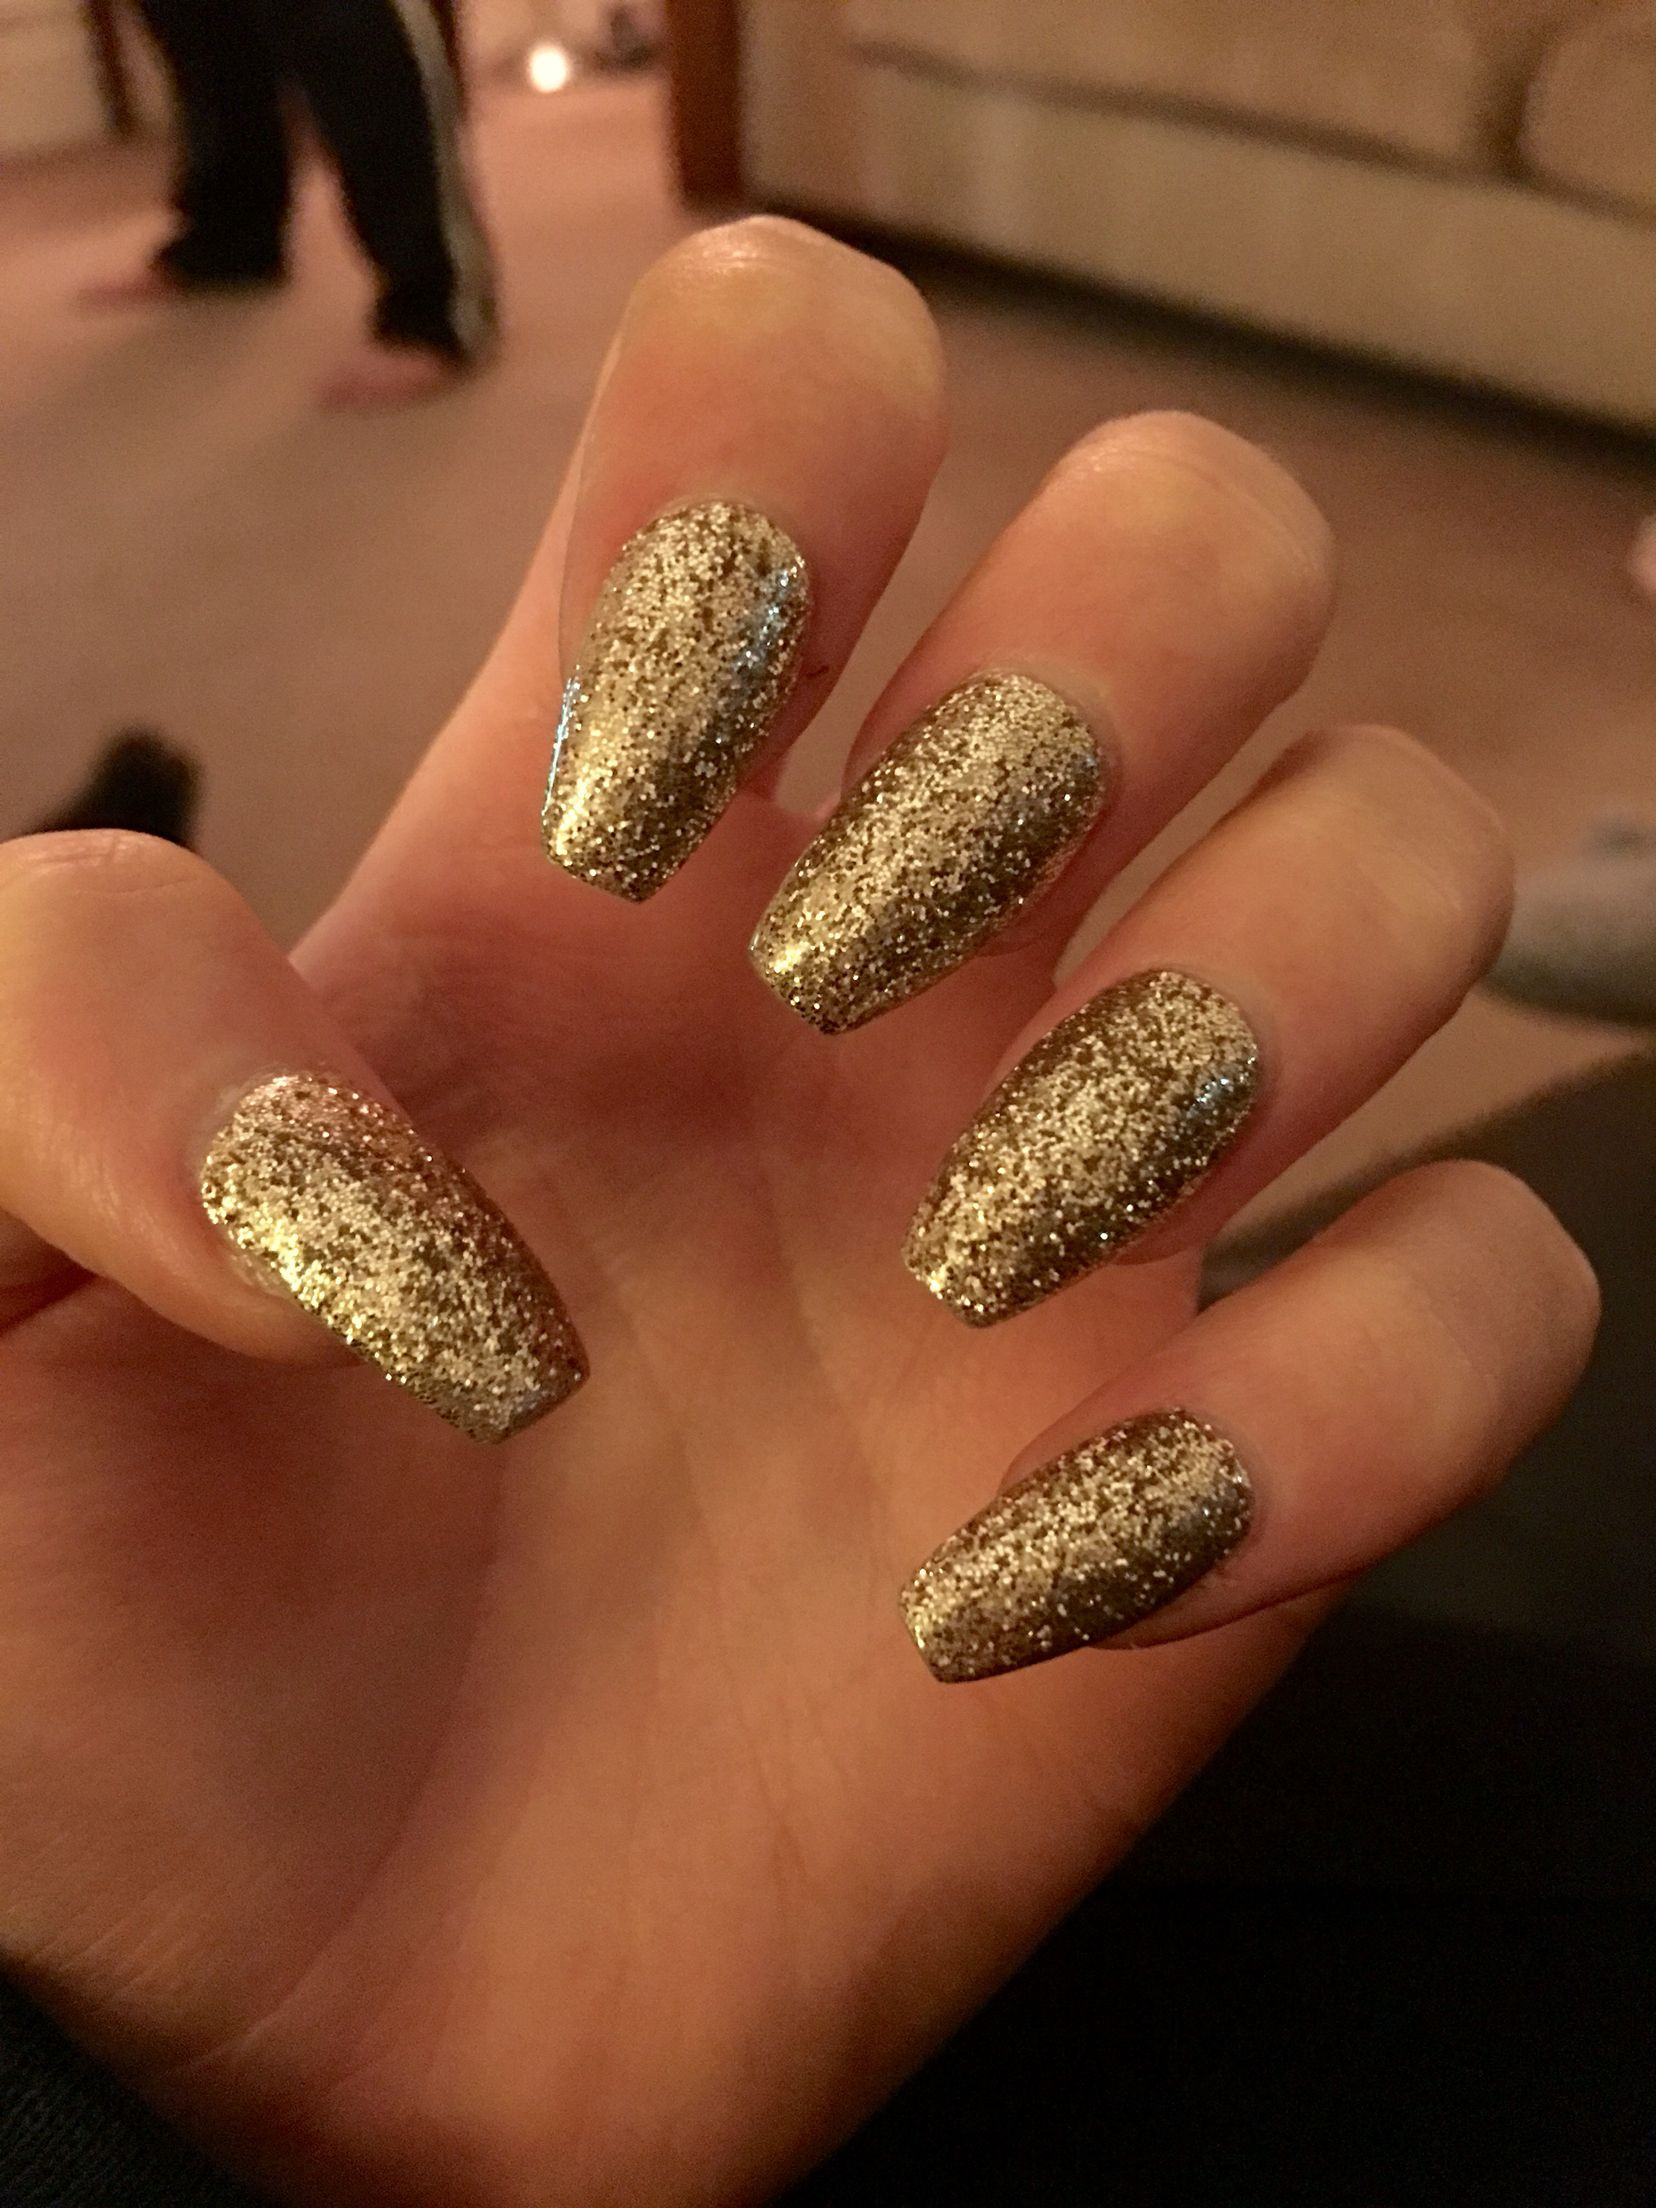 Gold Glitter Nails Designs
 Acrylic gold glitter nails